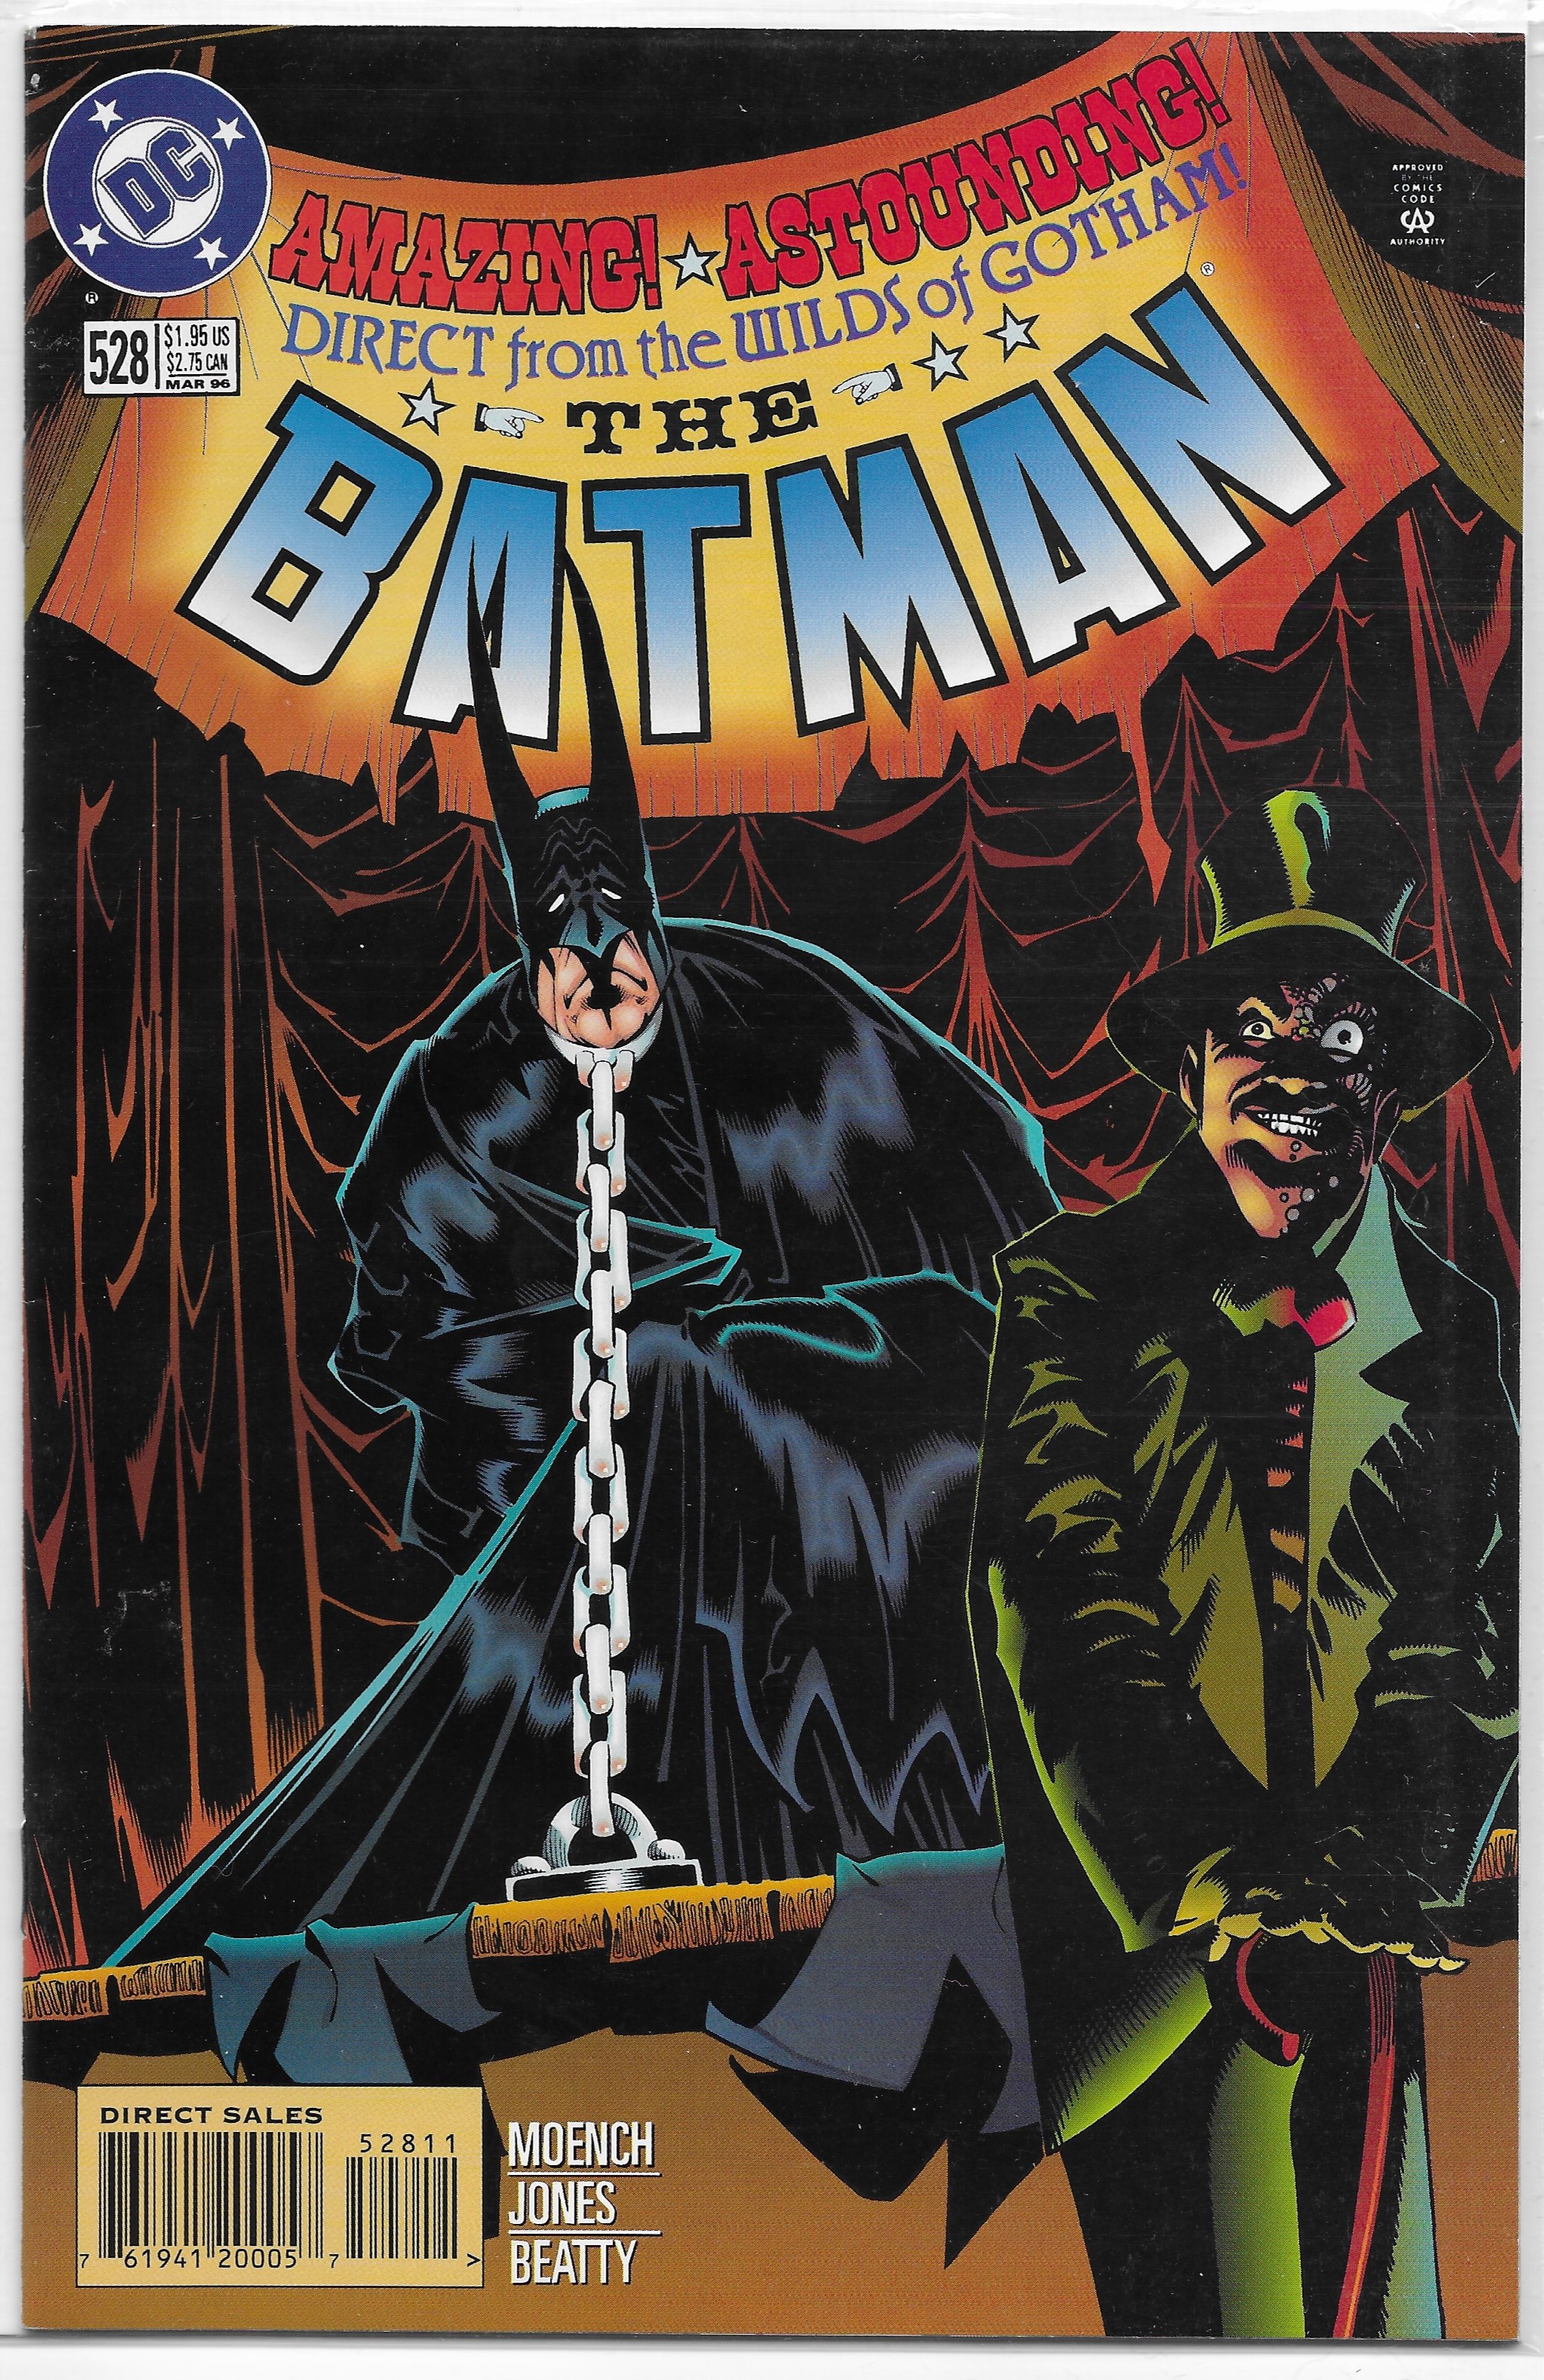 Batman vol. 1 #528 FN Moench/Kelley Jones, Mad Hatter | Comic Books -  Modern Age, DC Comics, Batman, Superhero / HipComic